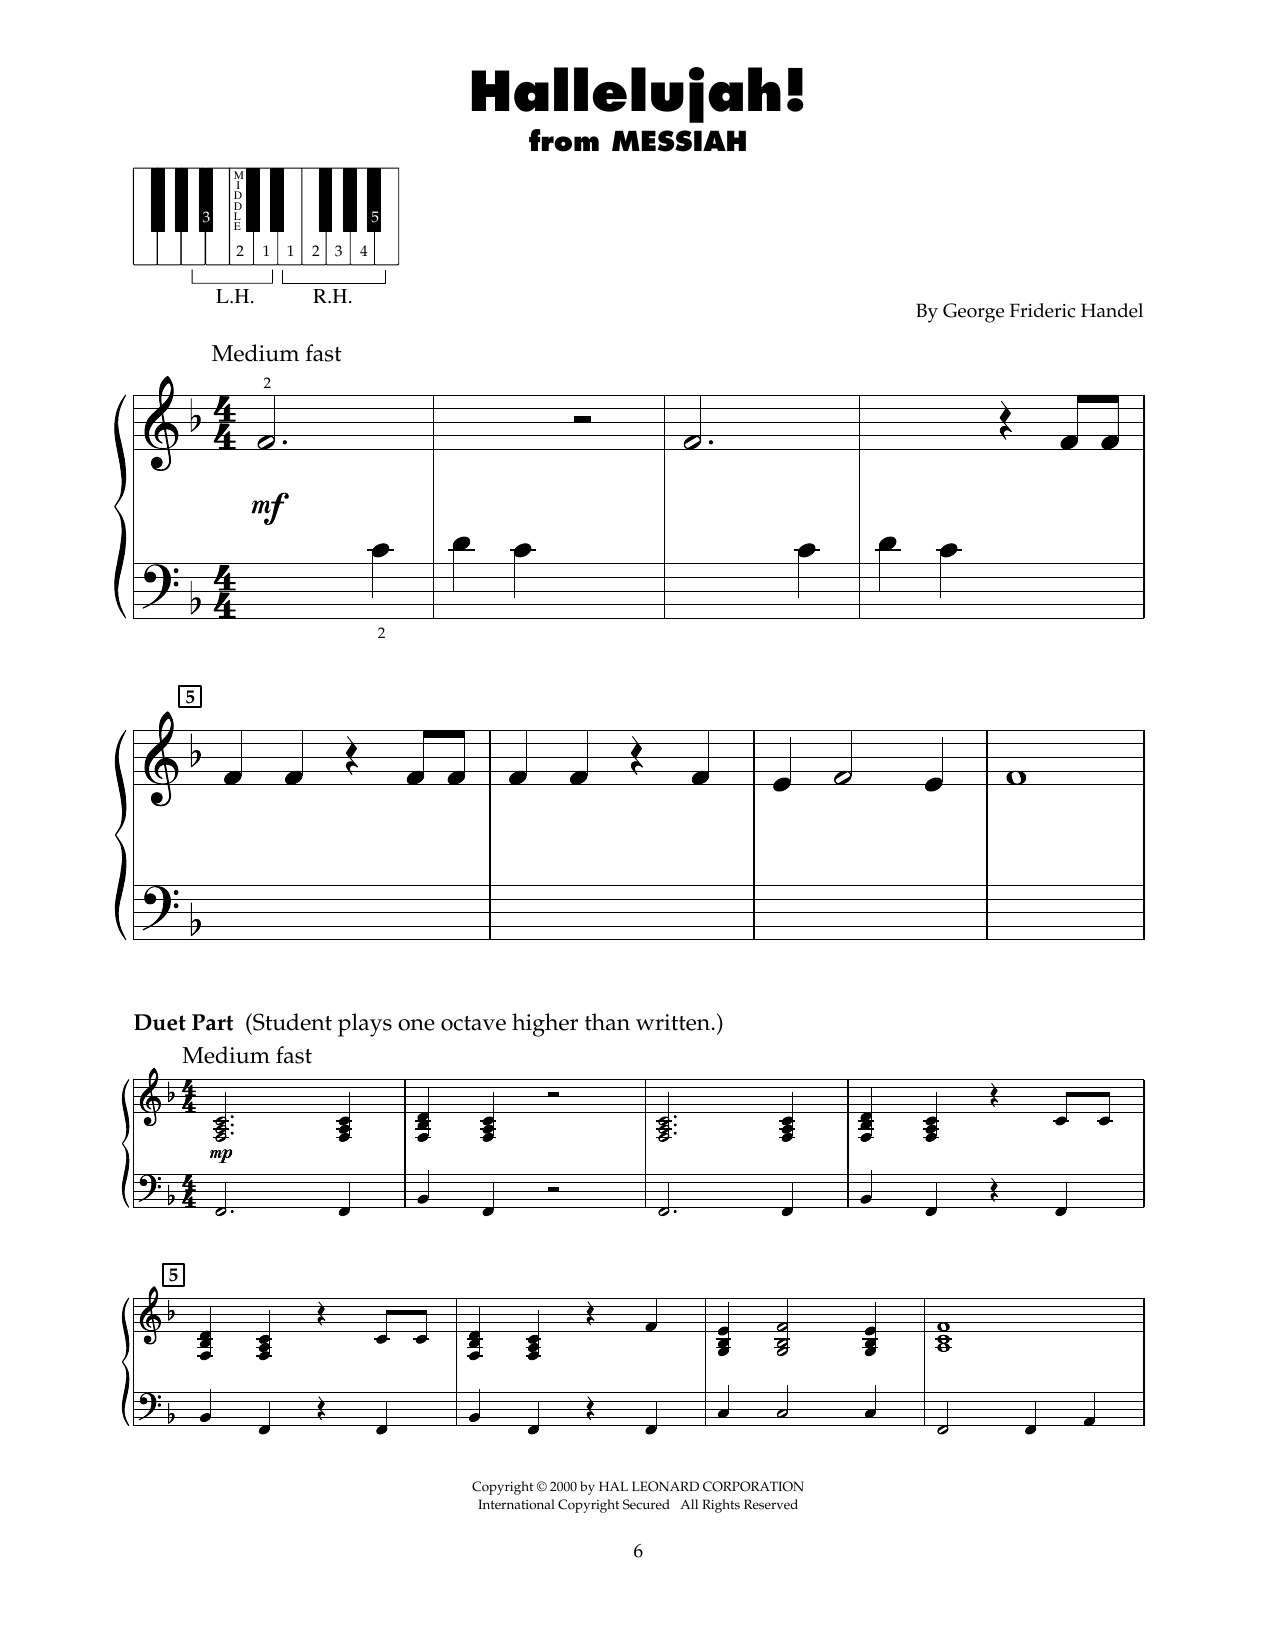 George Frideric Handel Hallelujah Chorus (arr. Carol Klose) Sheet Music Notes & Chords for 5-Finger Piano - Download or Print PDF